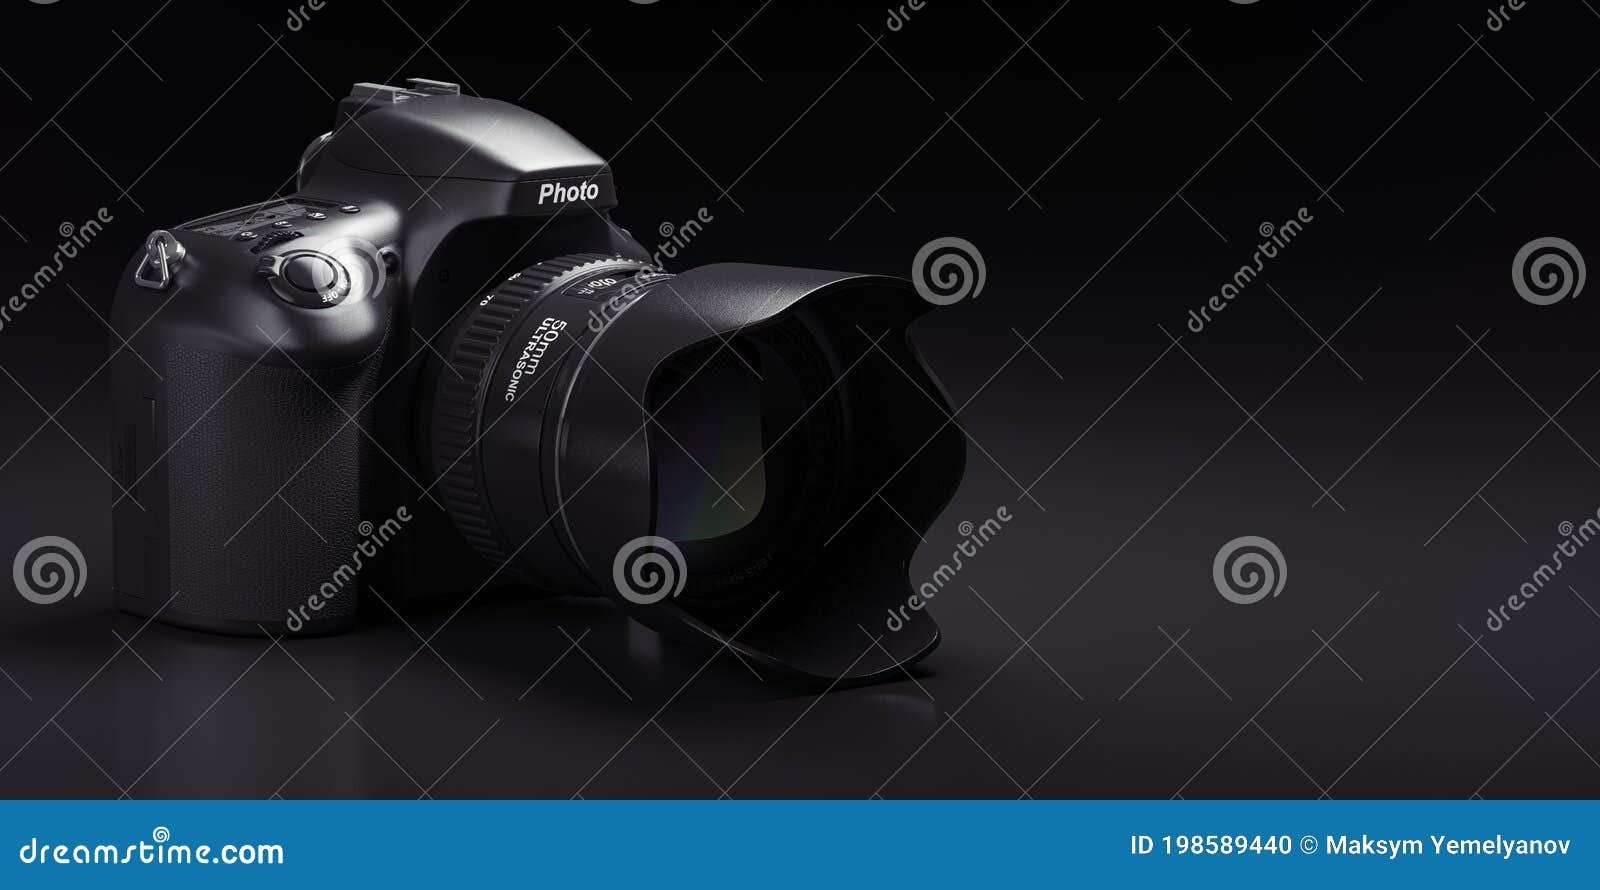 professional digital photo camera on black background